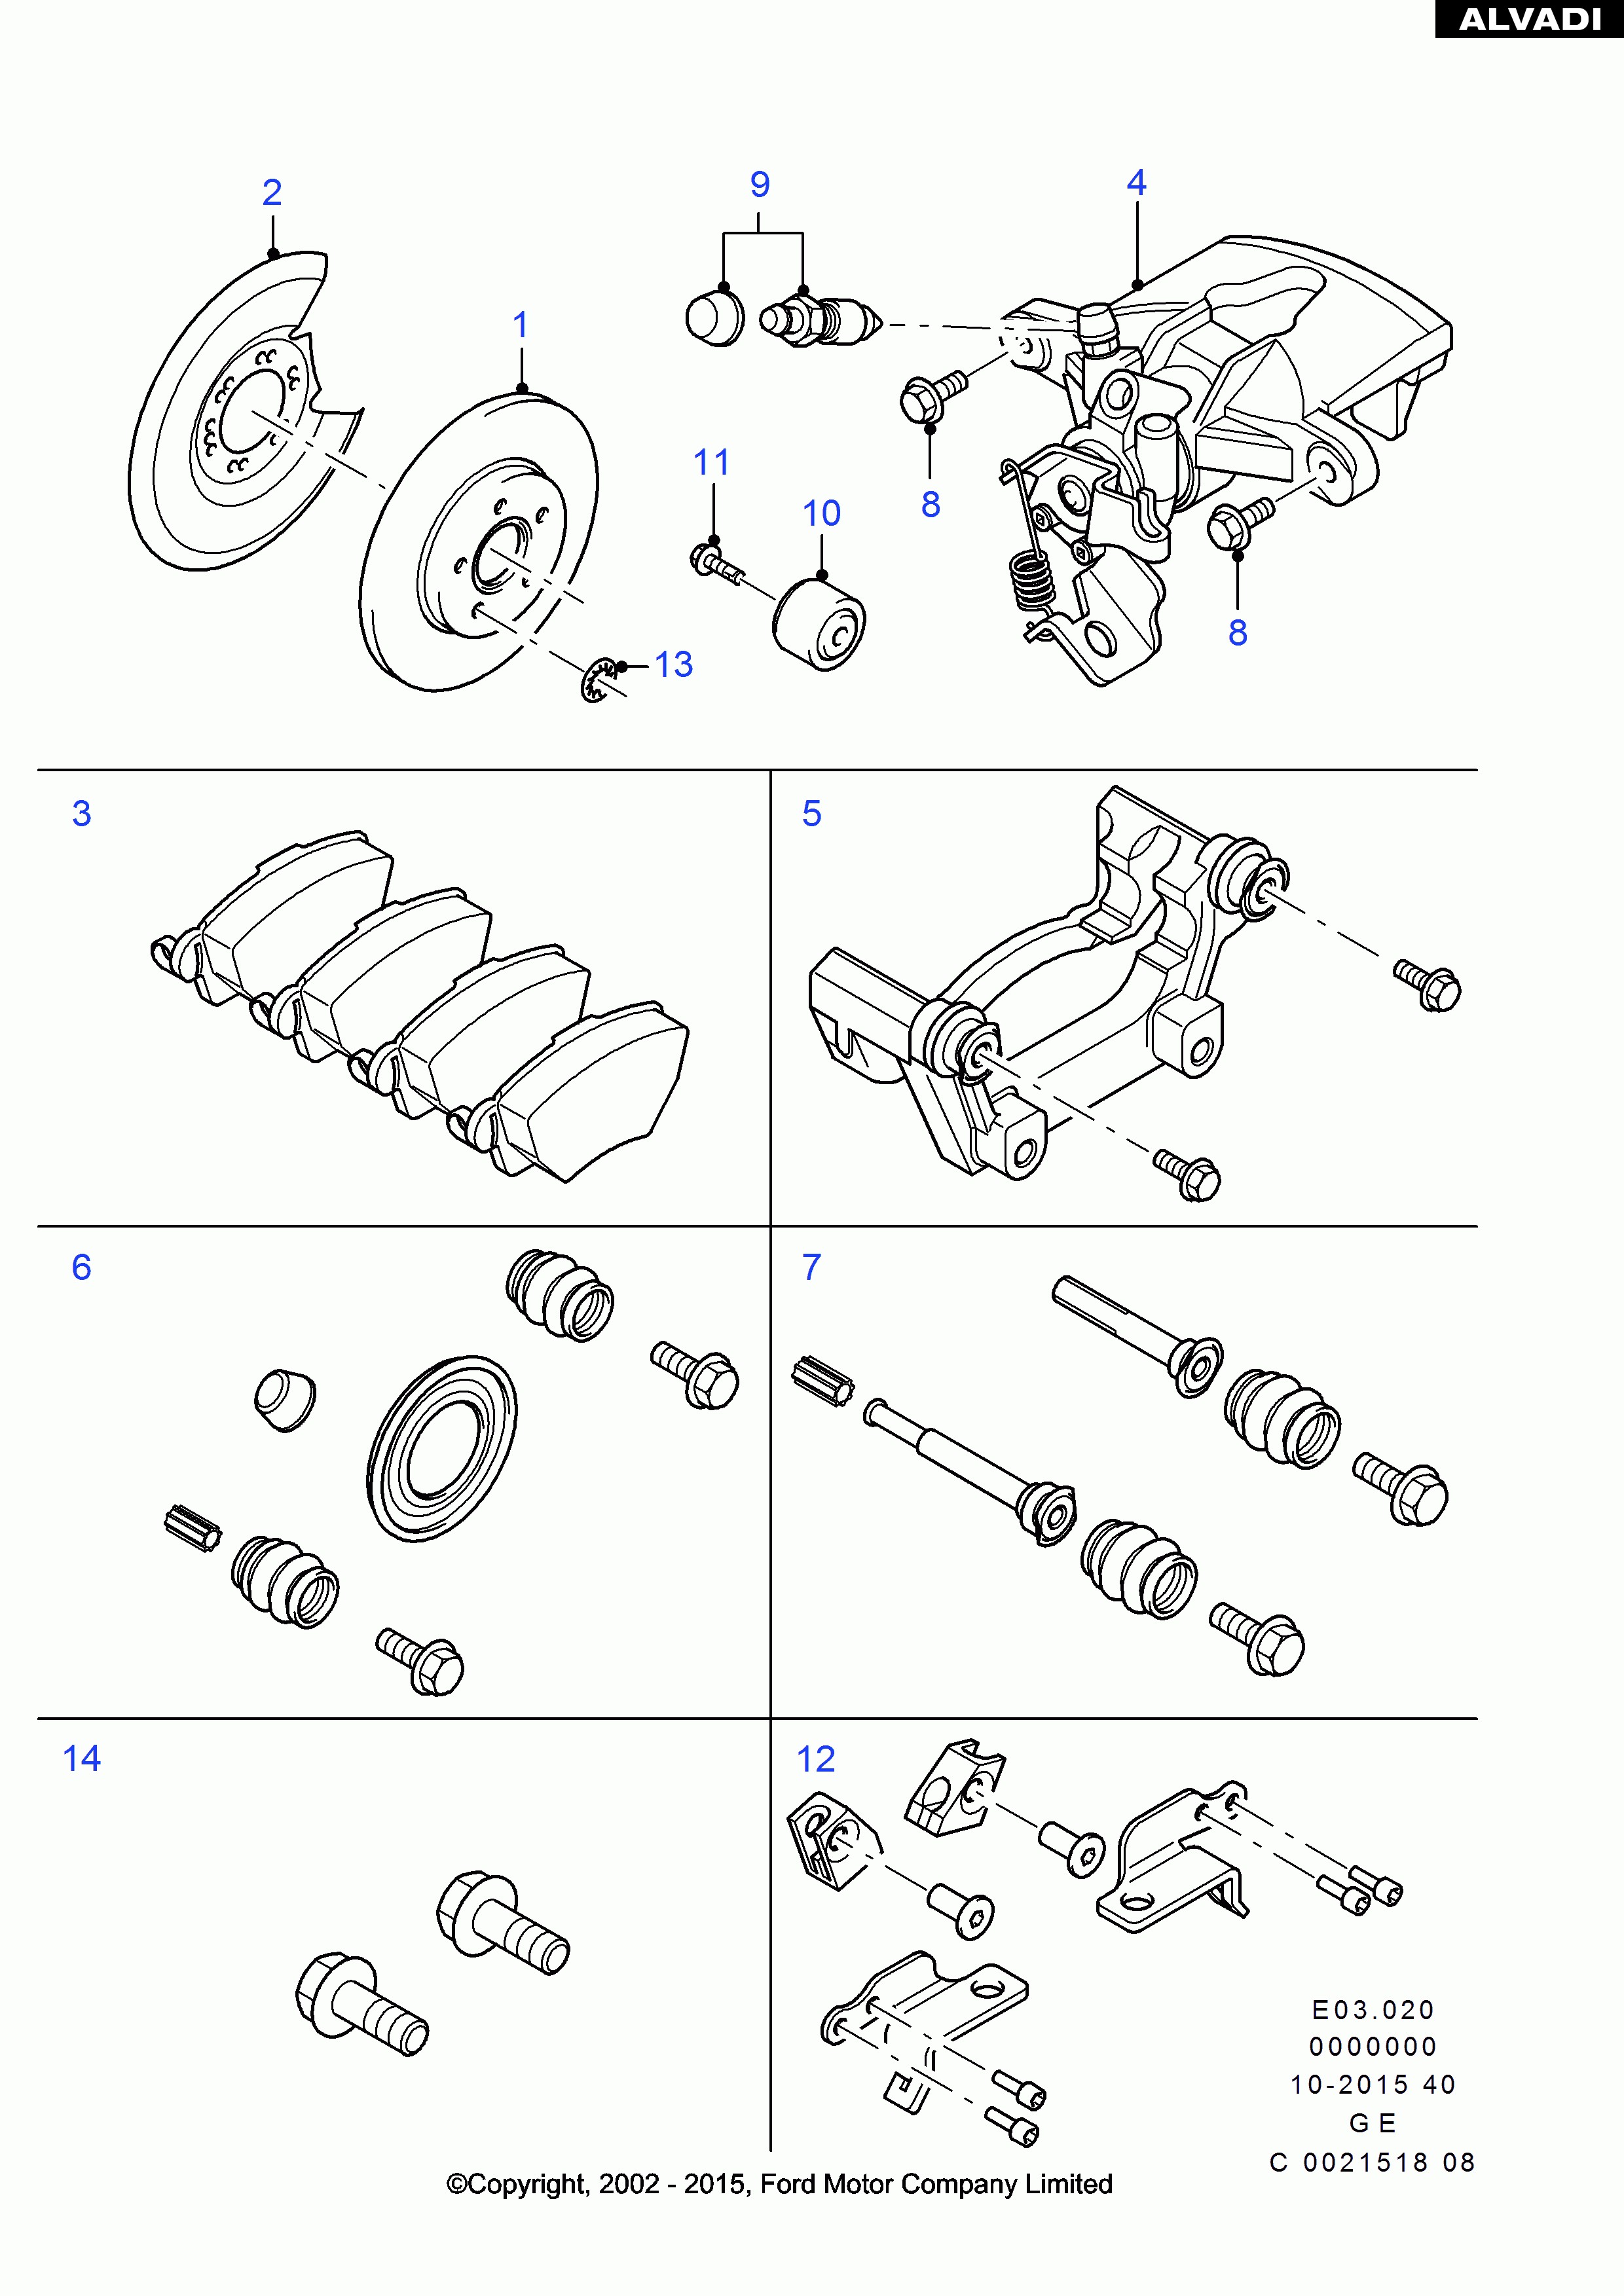 Disc Brake Parts Diagram ford Rear Brake Discs and Calipers Of Disc Brake Parts Diagram